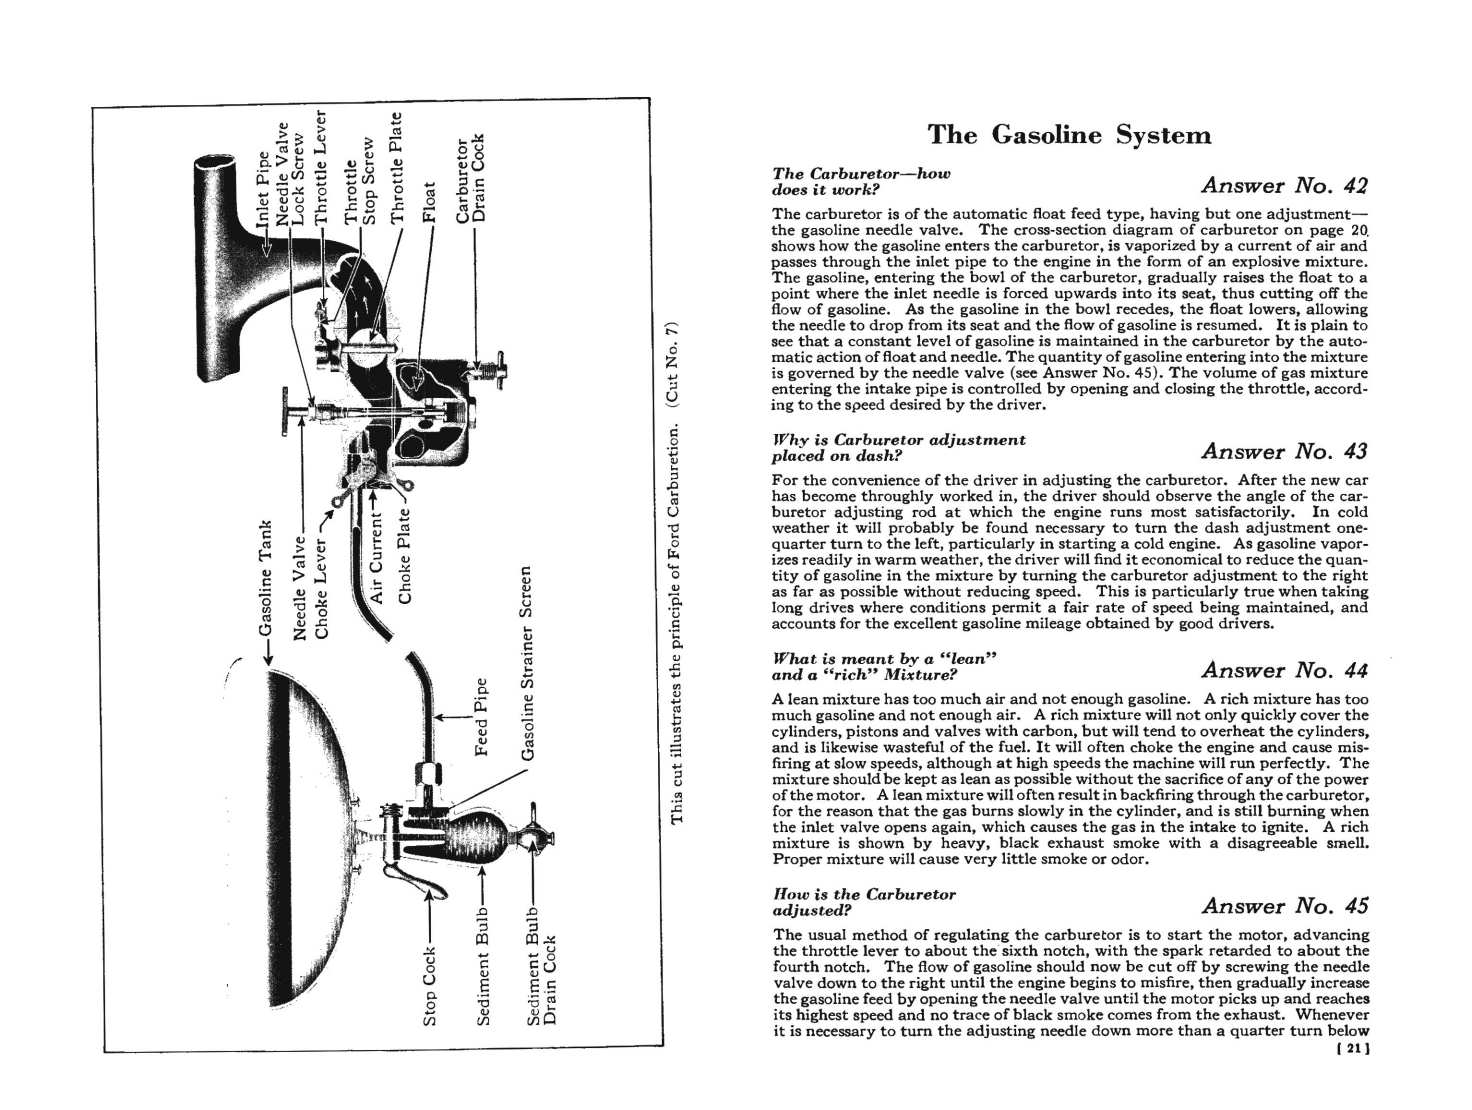 n_1924 Ford Owners Manual-20-21.jpg